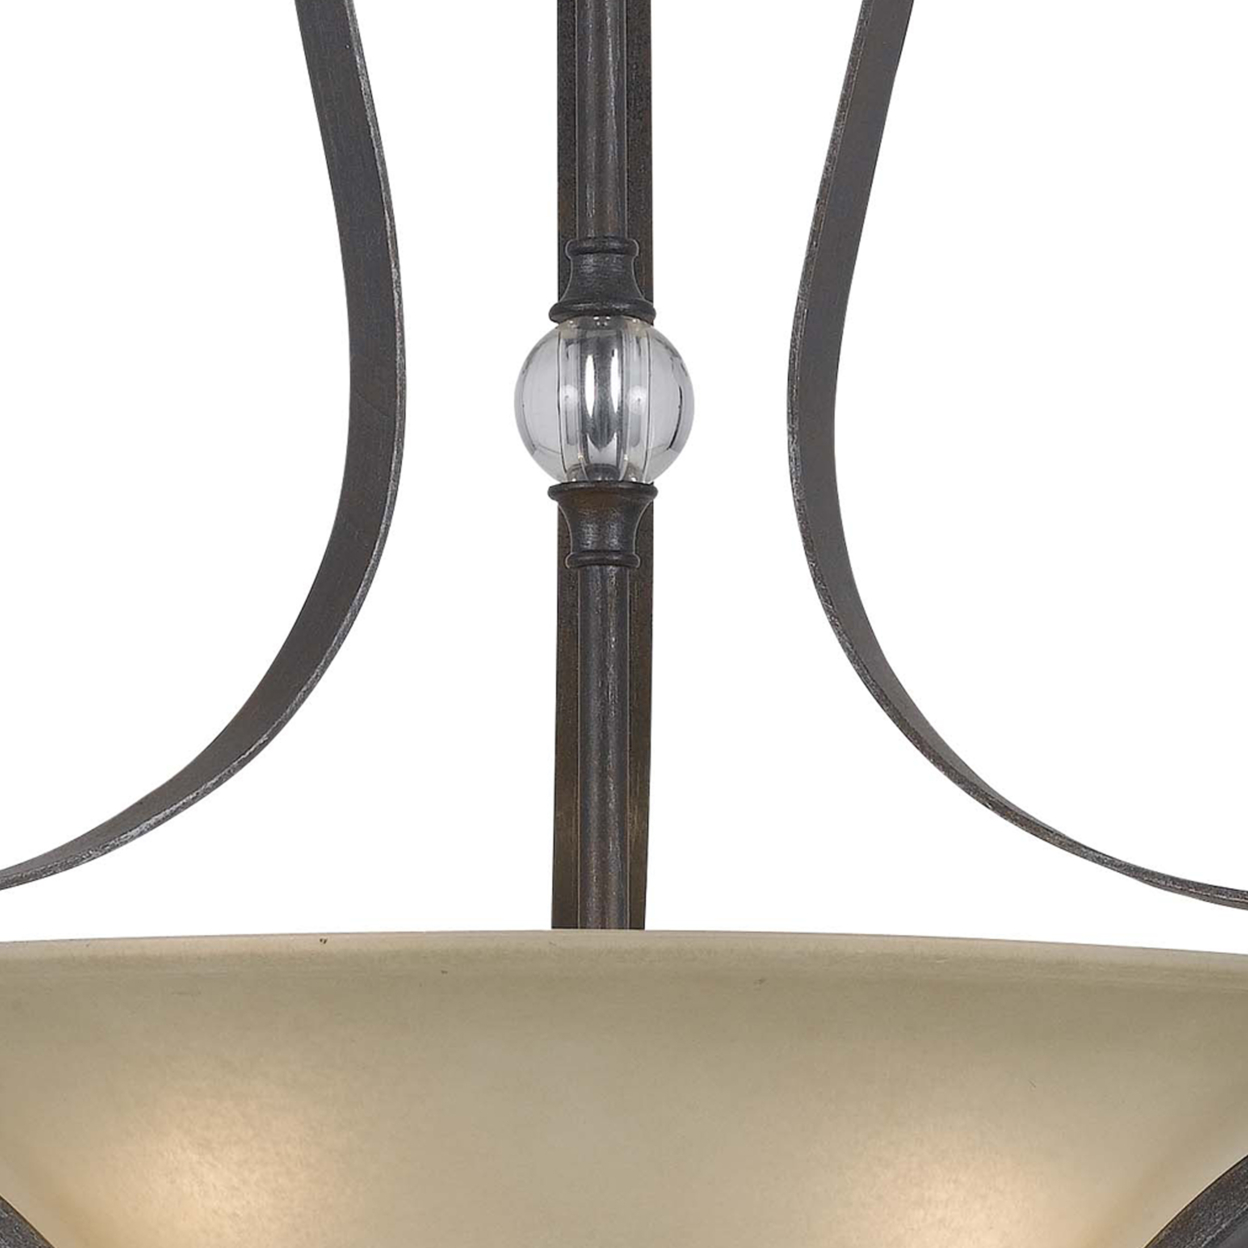 3 Bulb Bowl Style Glass Pendant Fixture With Metal Frame, Gray And Bronze- Saltoro Sherpi